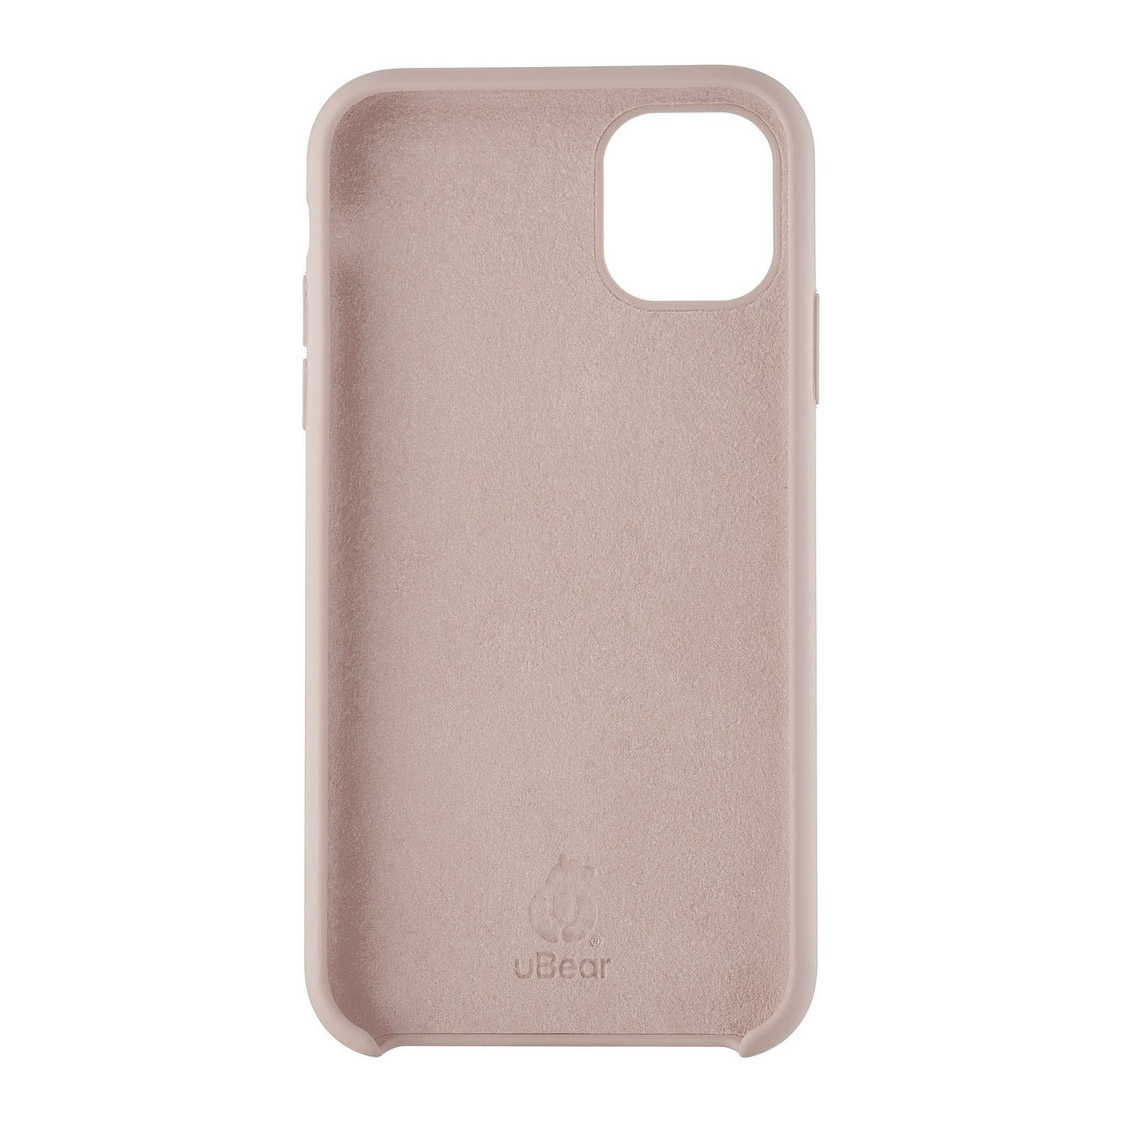 Чехол uBear Soft-touch Case для Apple iPhone 11, светло-розовый - фото 1